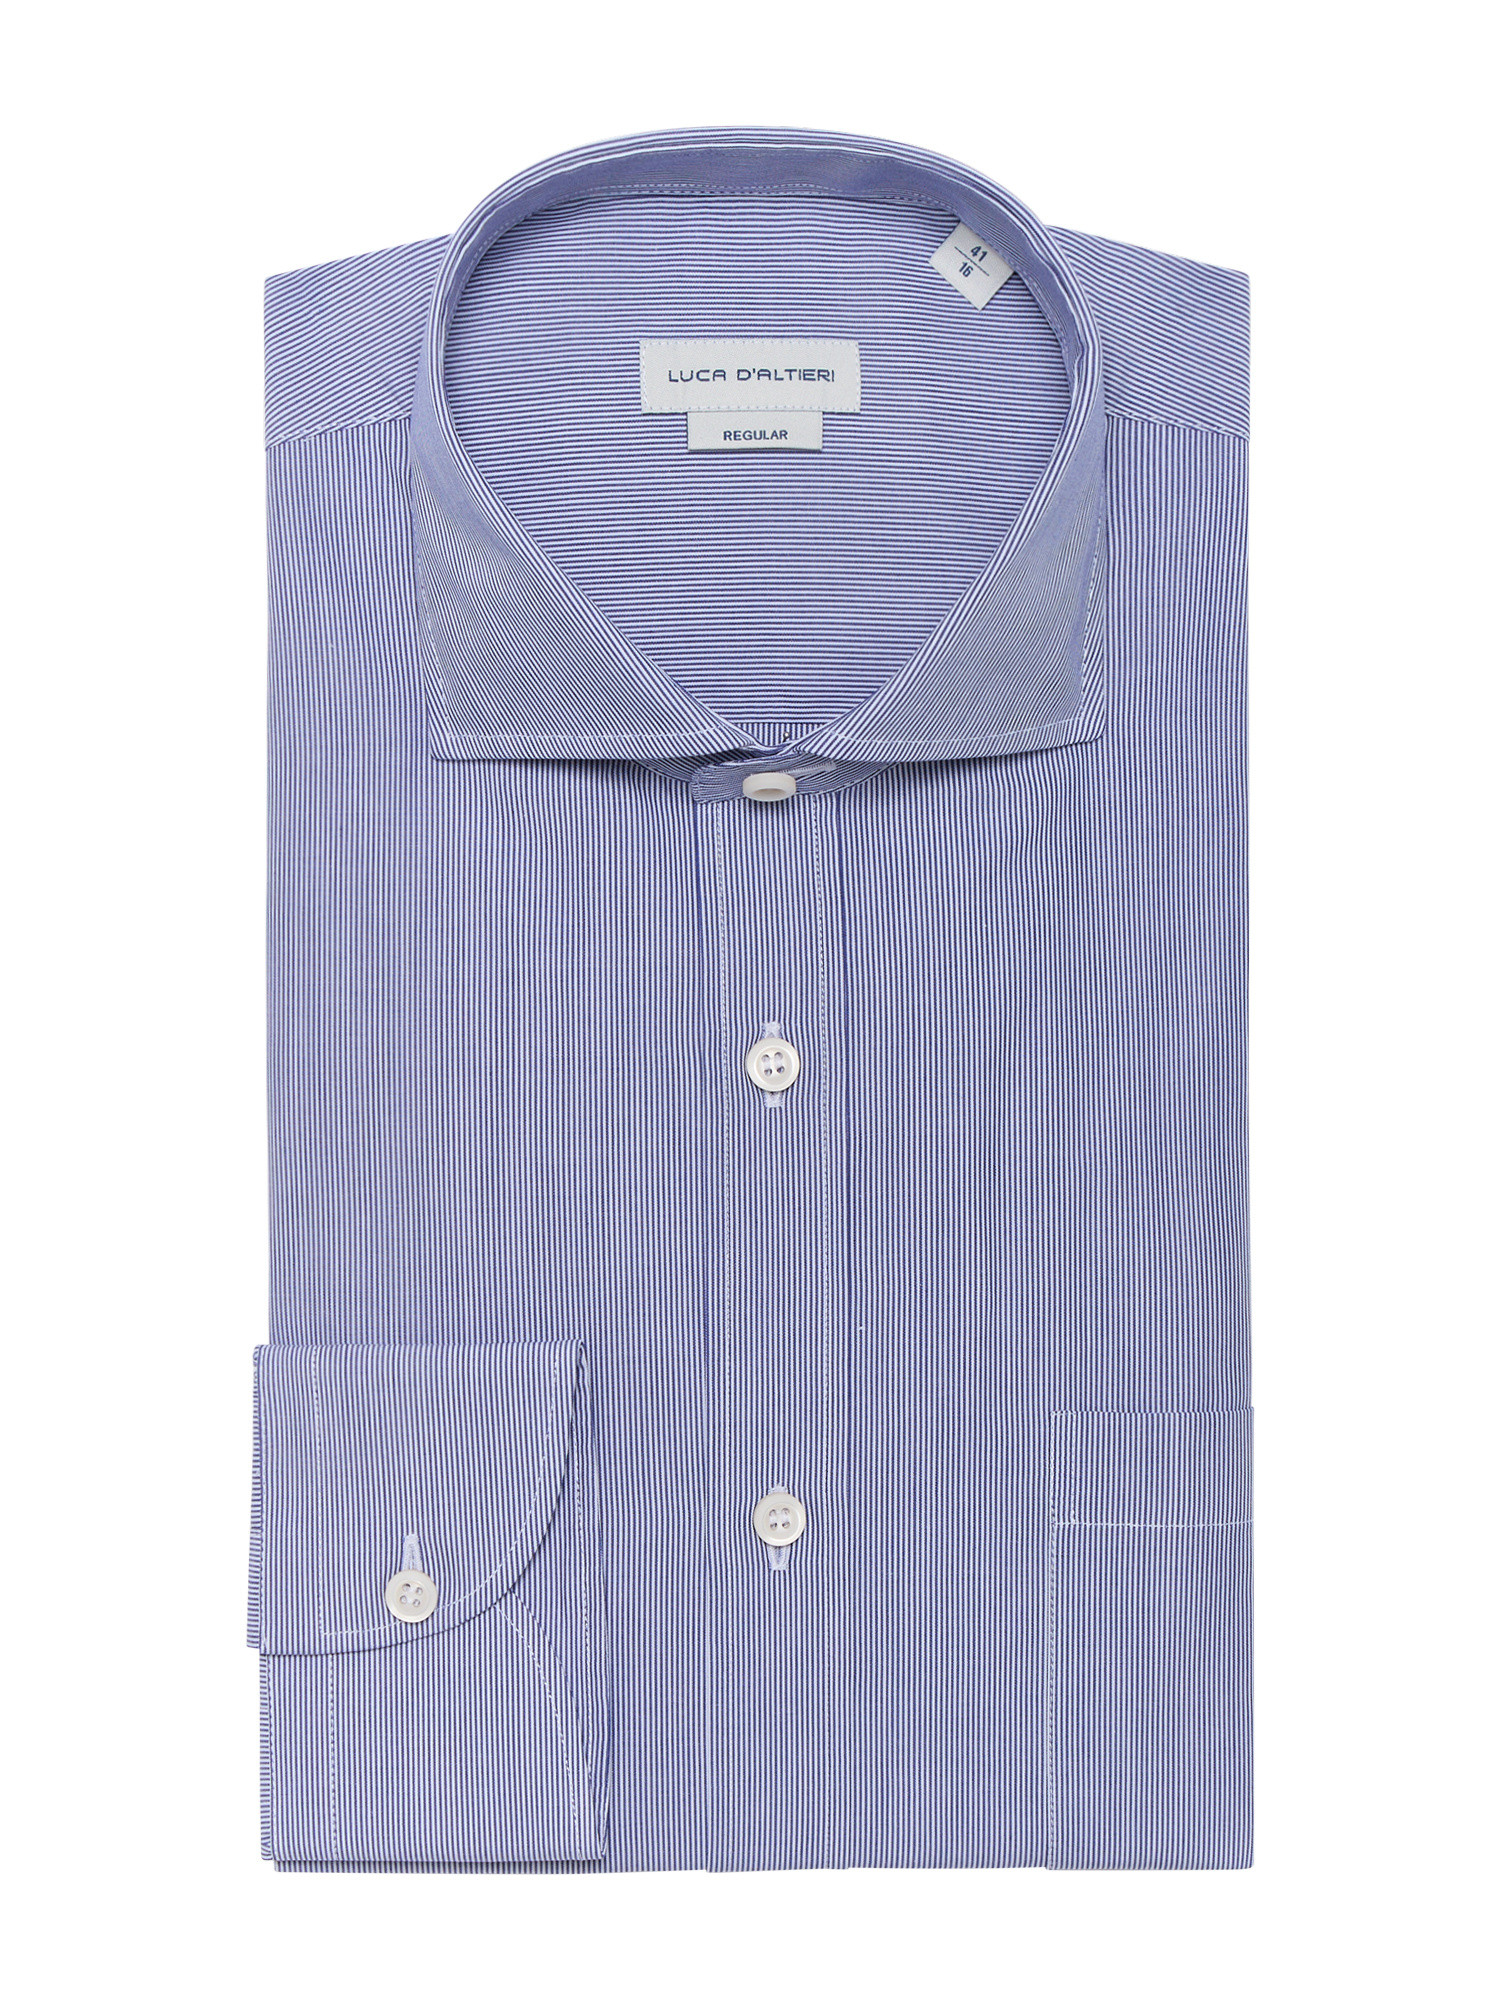 Luca D'Altieri - Regular fit casual shirt in pure cotton poplin, Blue, large image number 0